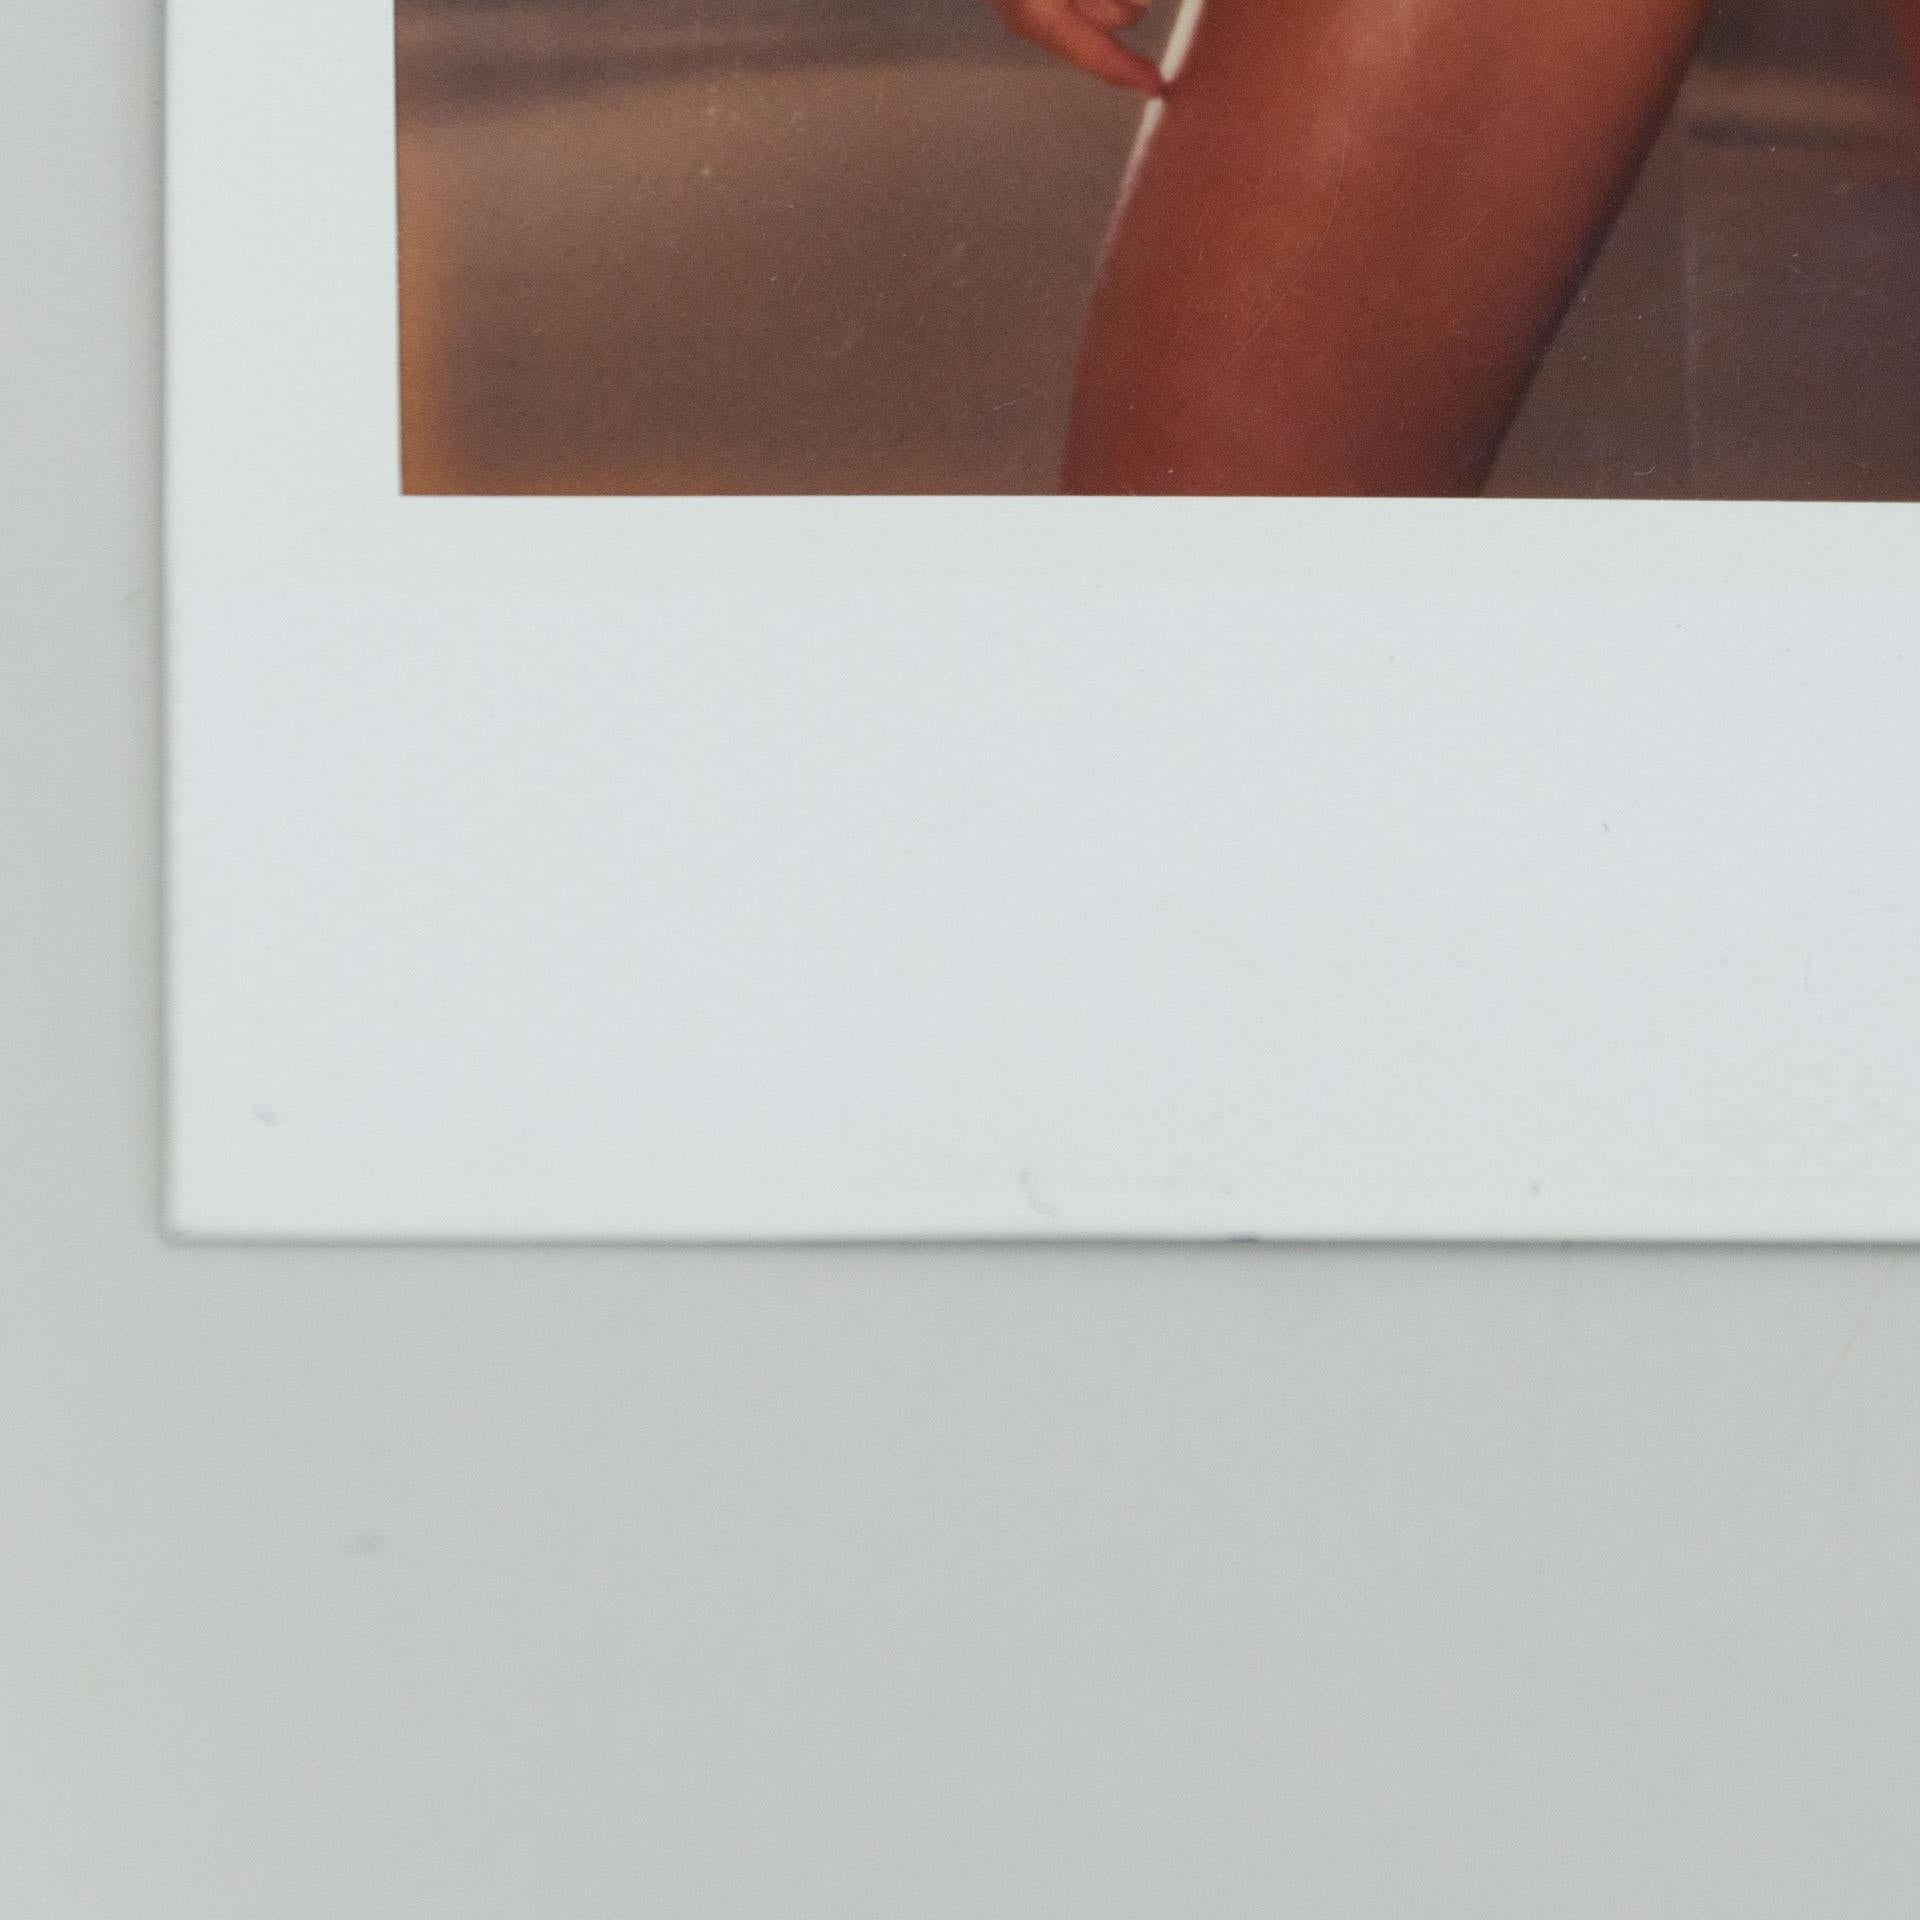 Miquel Arnal Set of Polaroid Photographs For Sale 5